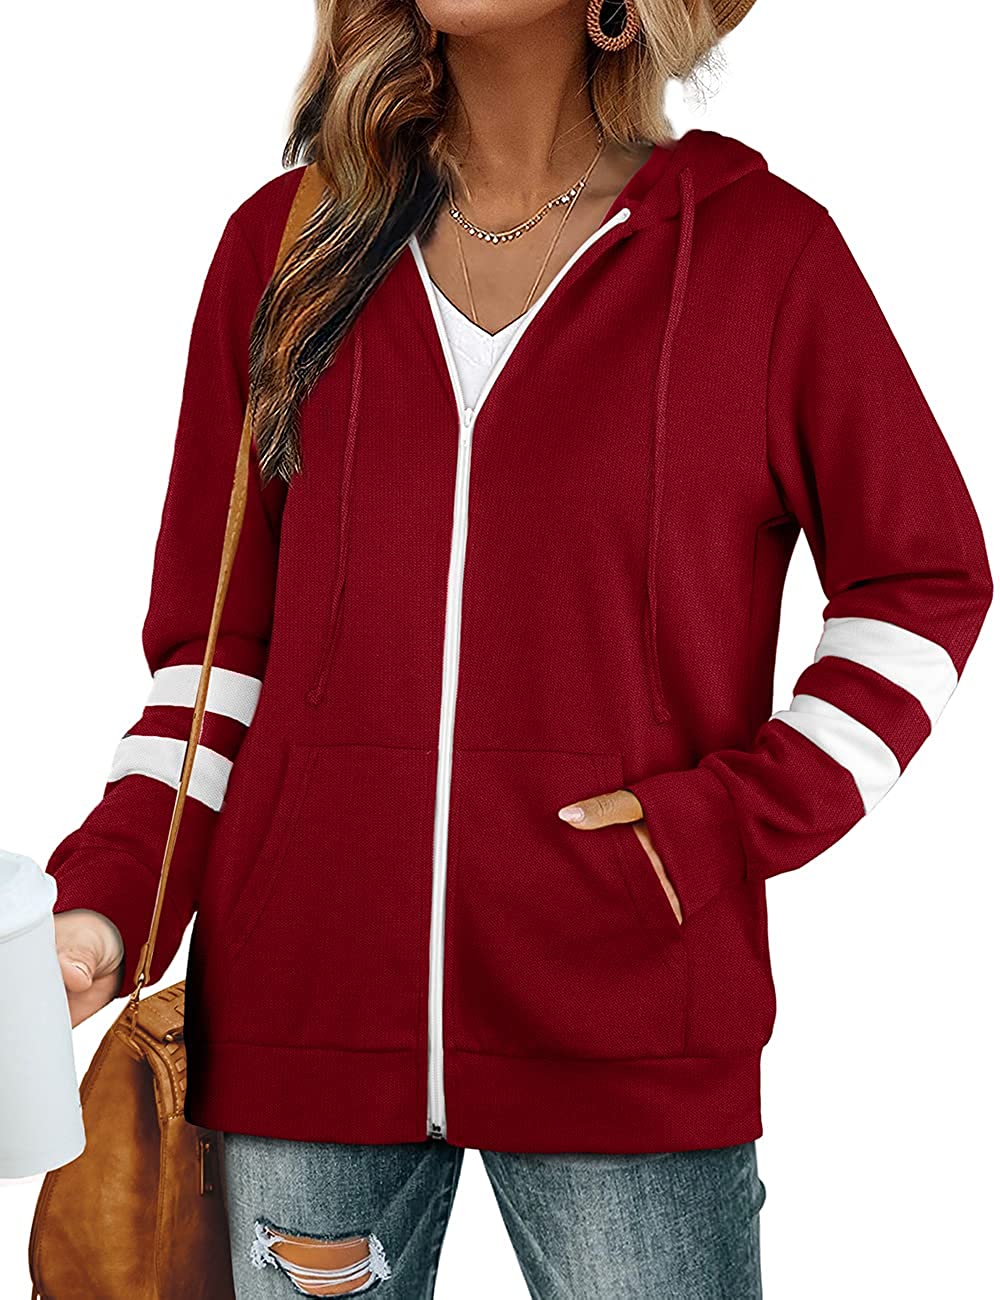 Bofell Womens Active Long Sleeve Zip Up Hoodies with Pocket Hooded Sweatshirts Jackets 